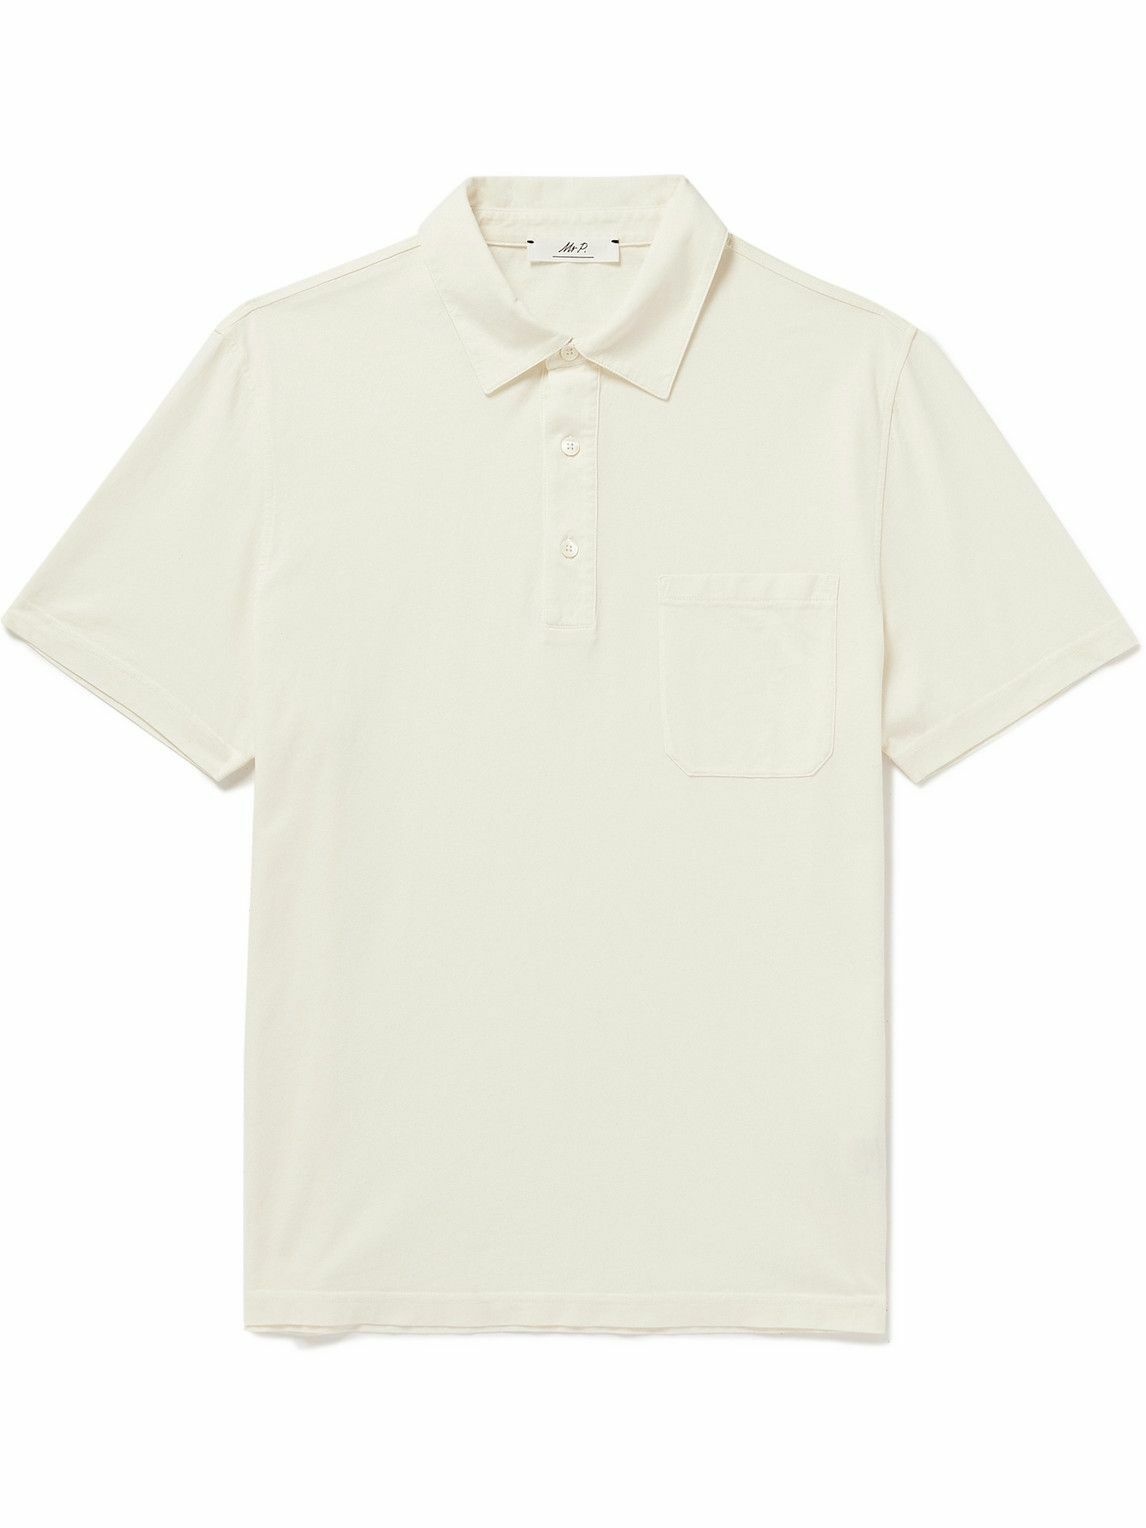 Mr P. - Garment-Dyed Cotton-Jersey Polo Shirt - White Mr P.